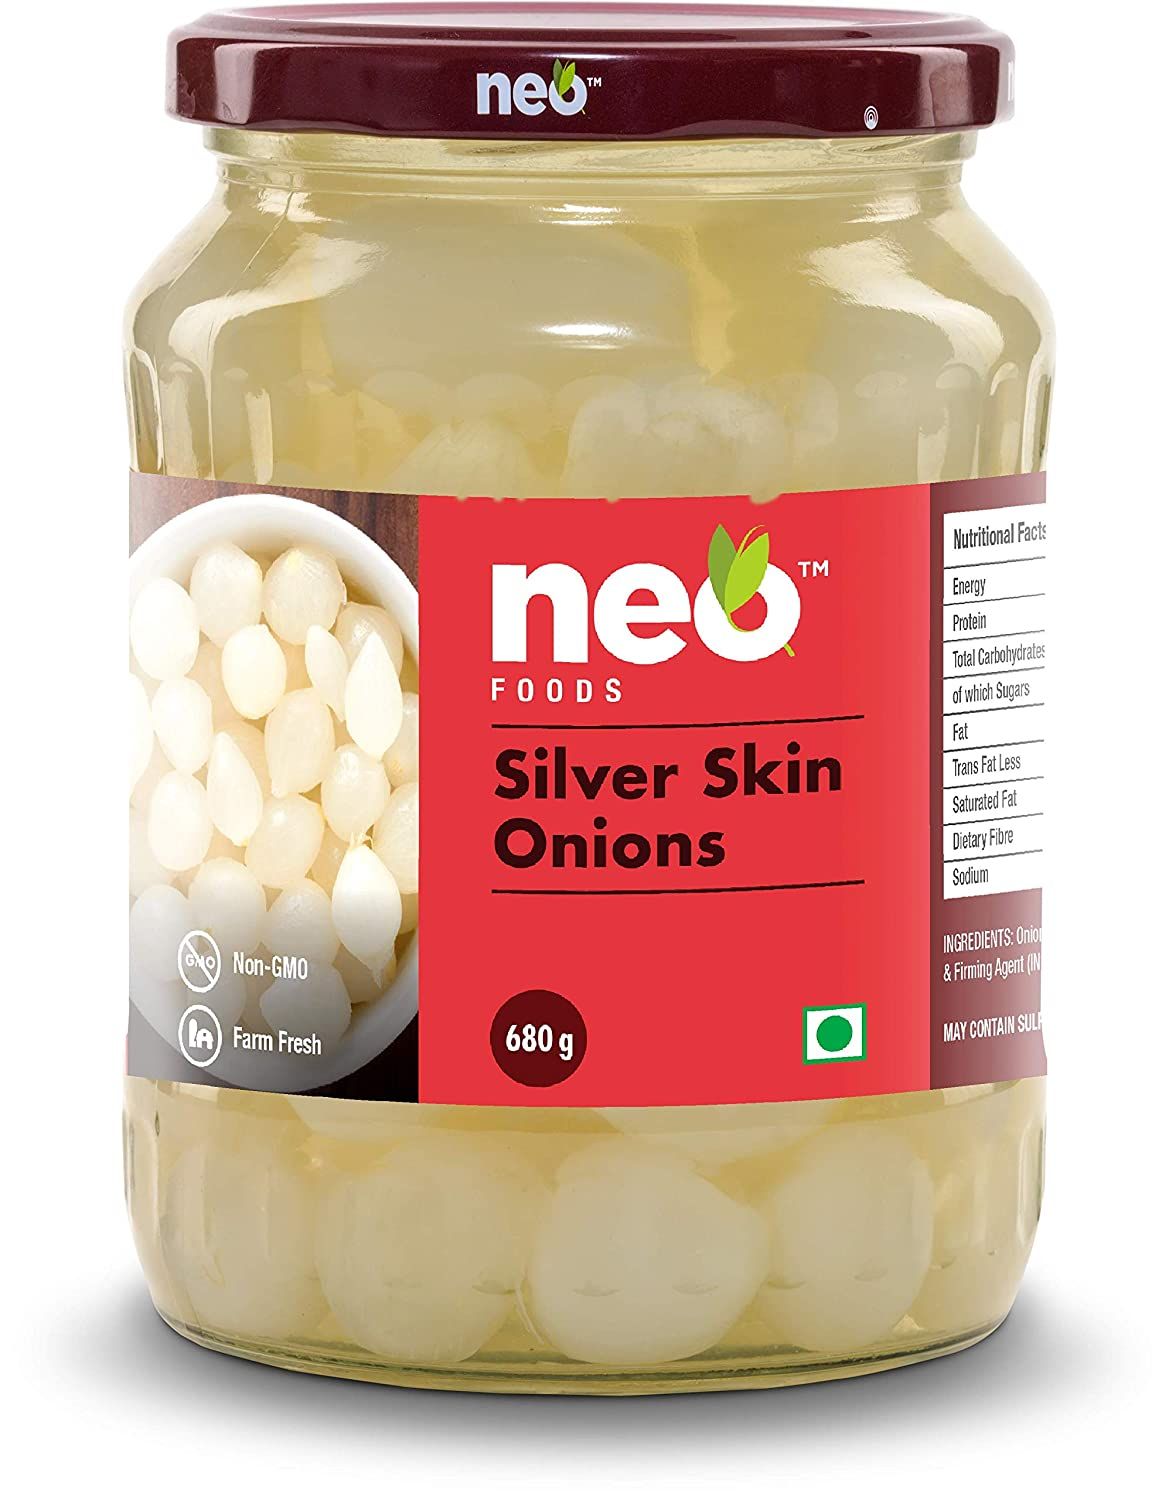 Neo Silver Skin Onions In Vinegar Image